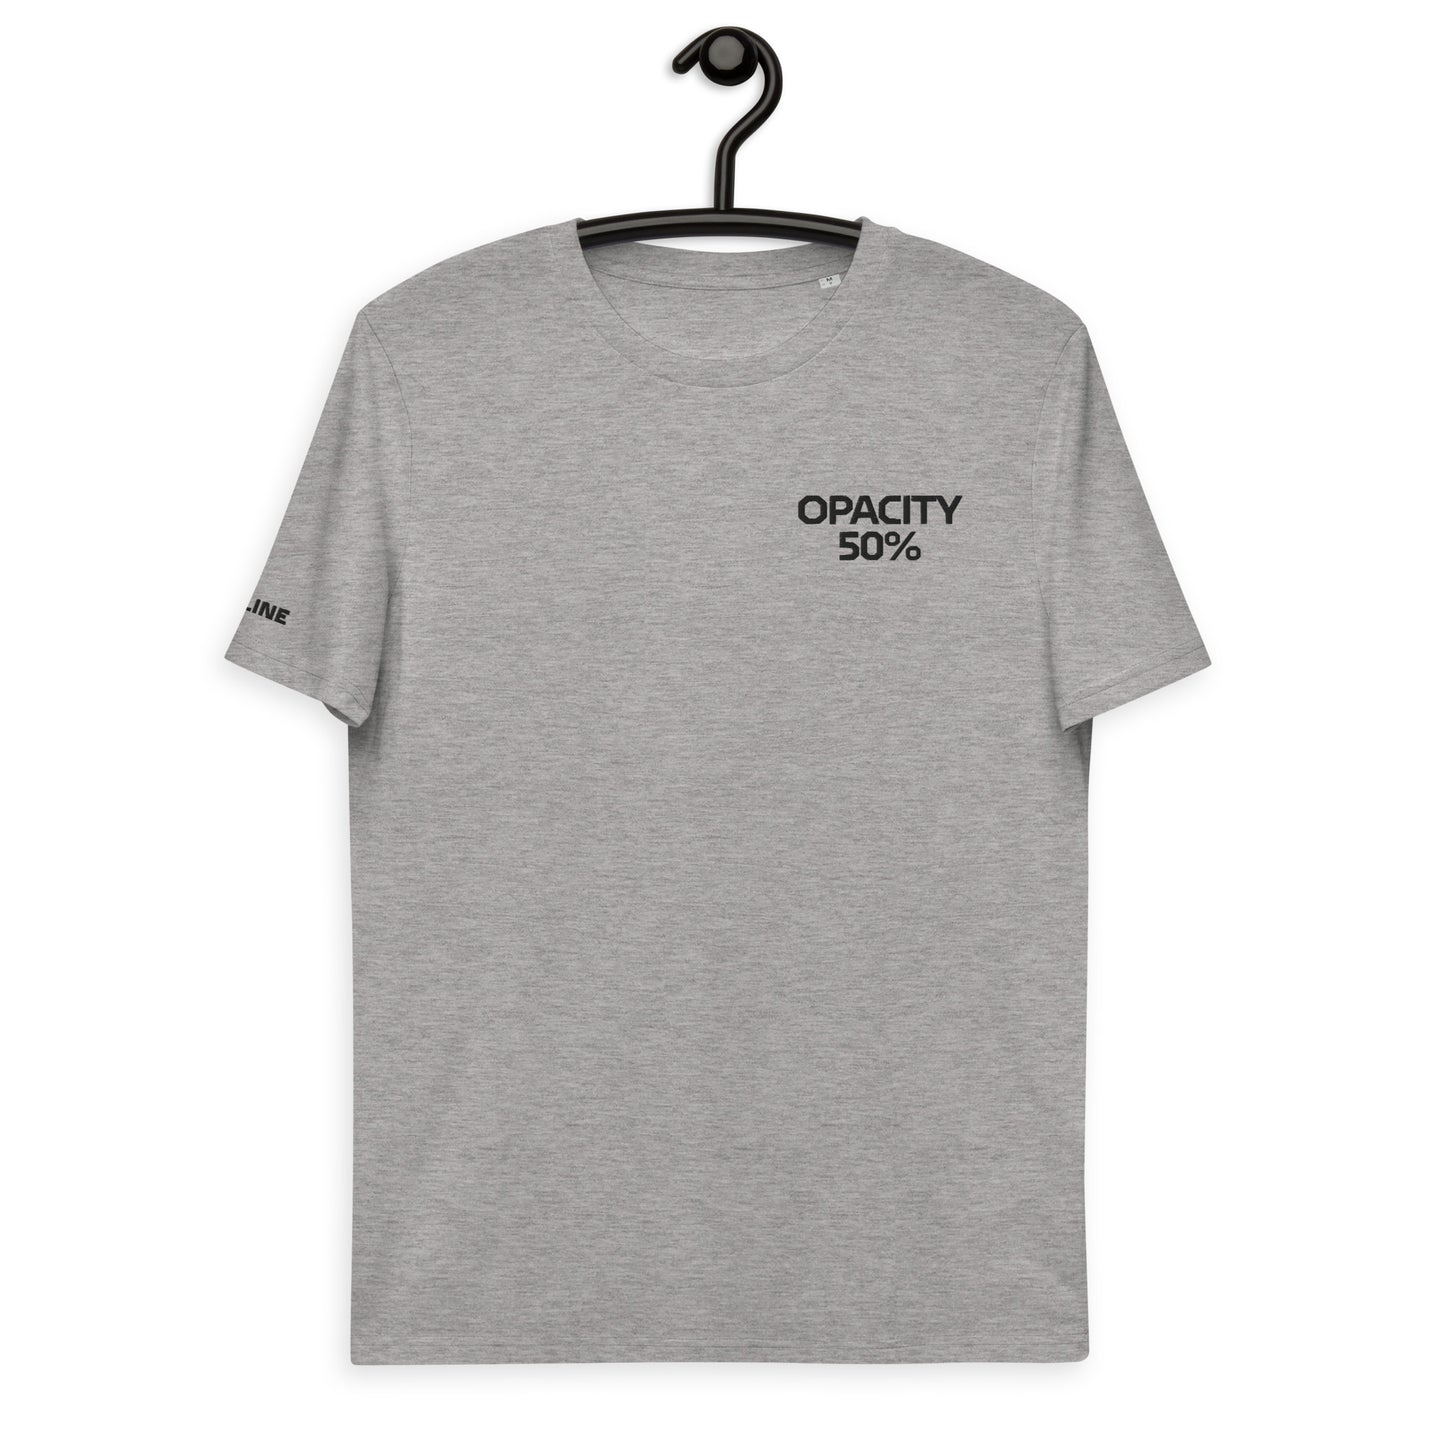 Opacity 50% Unisex organic cotton t-shirt